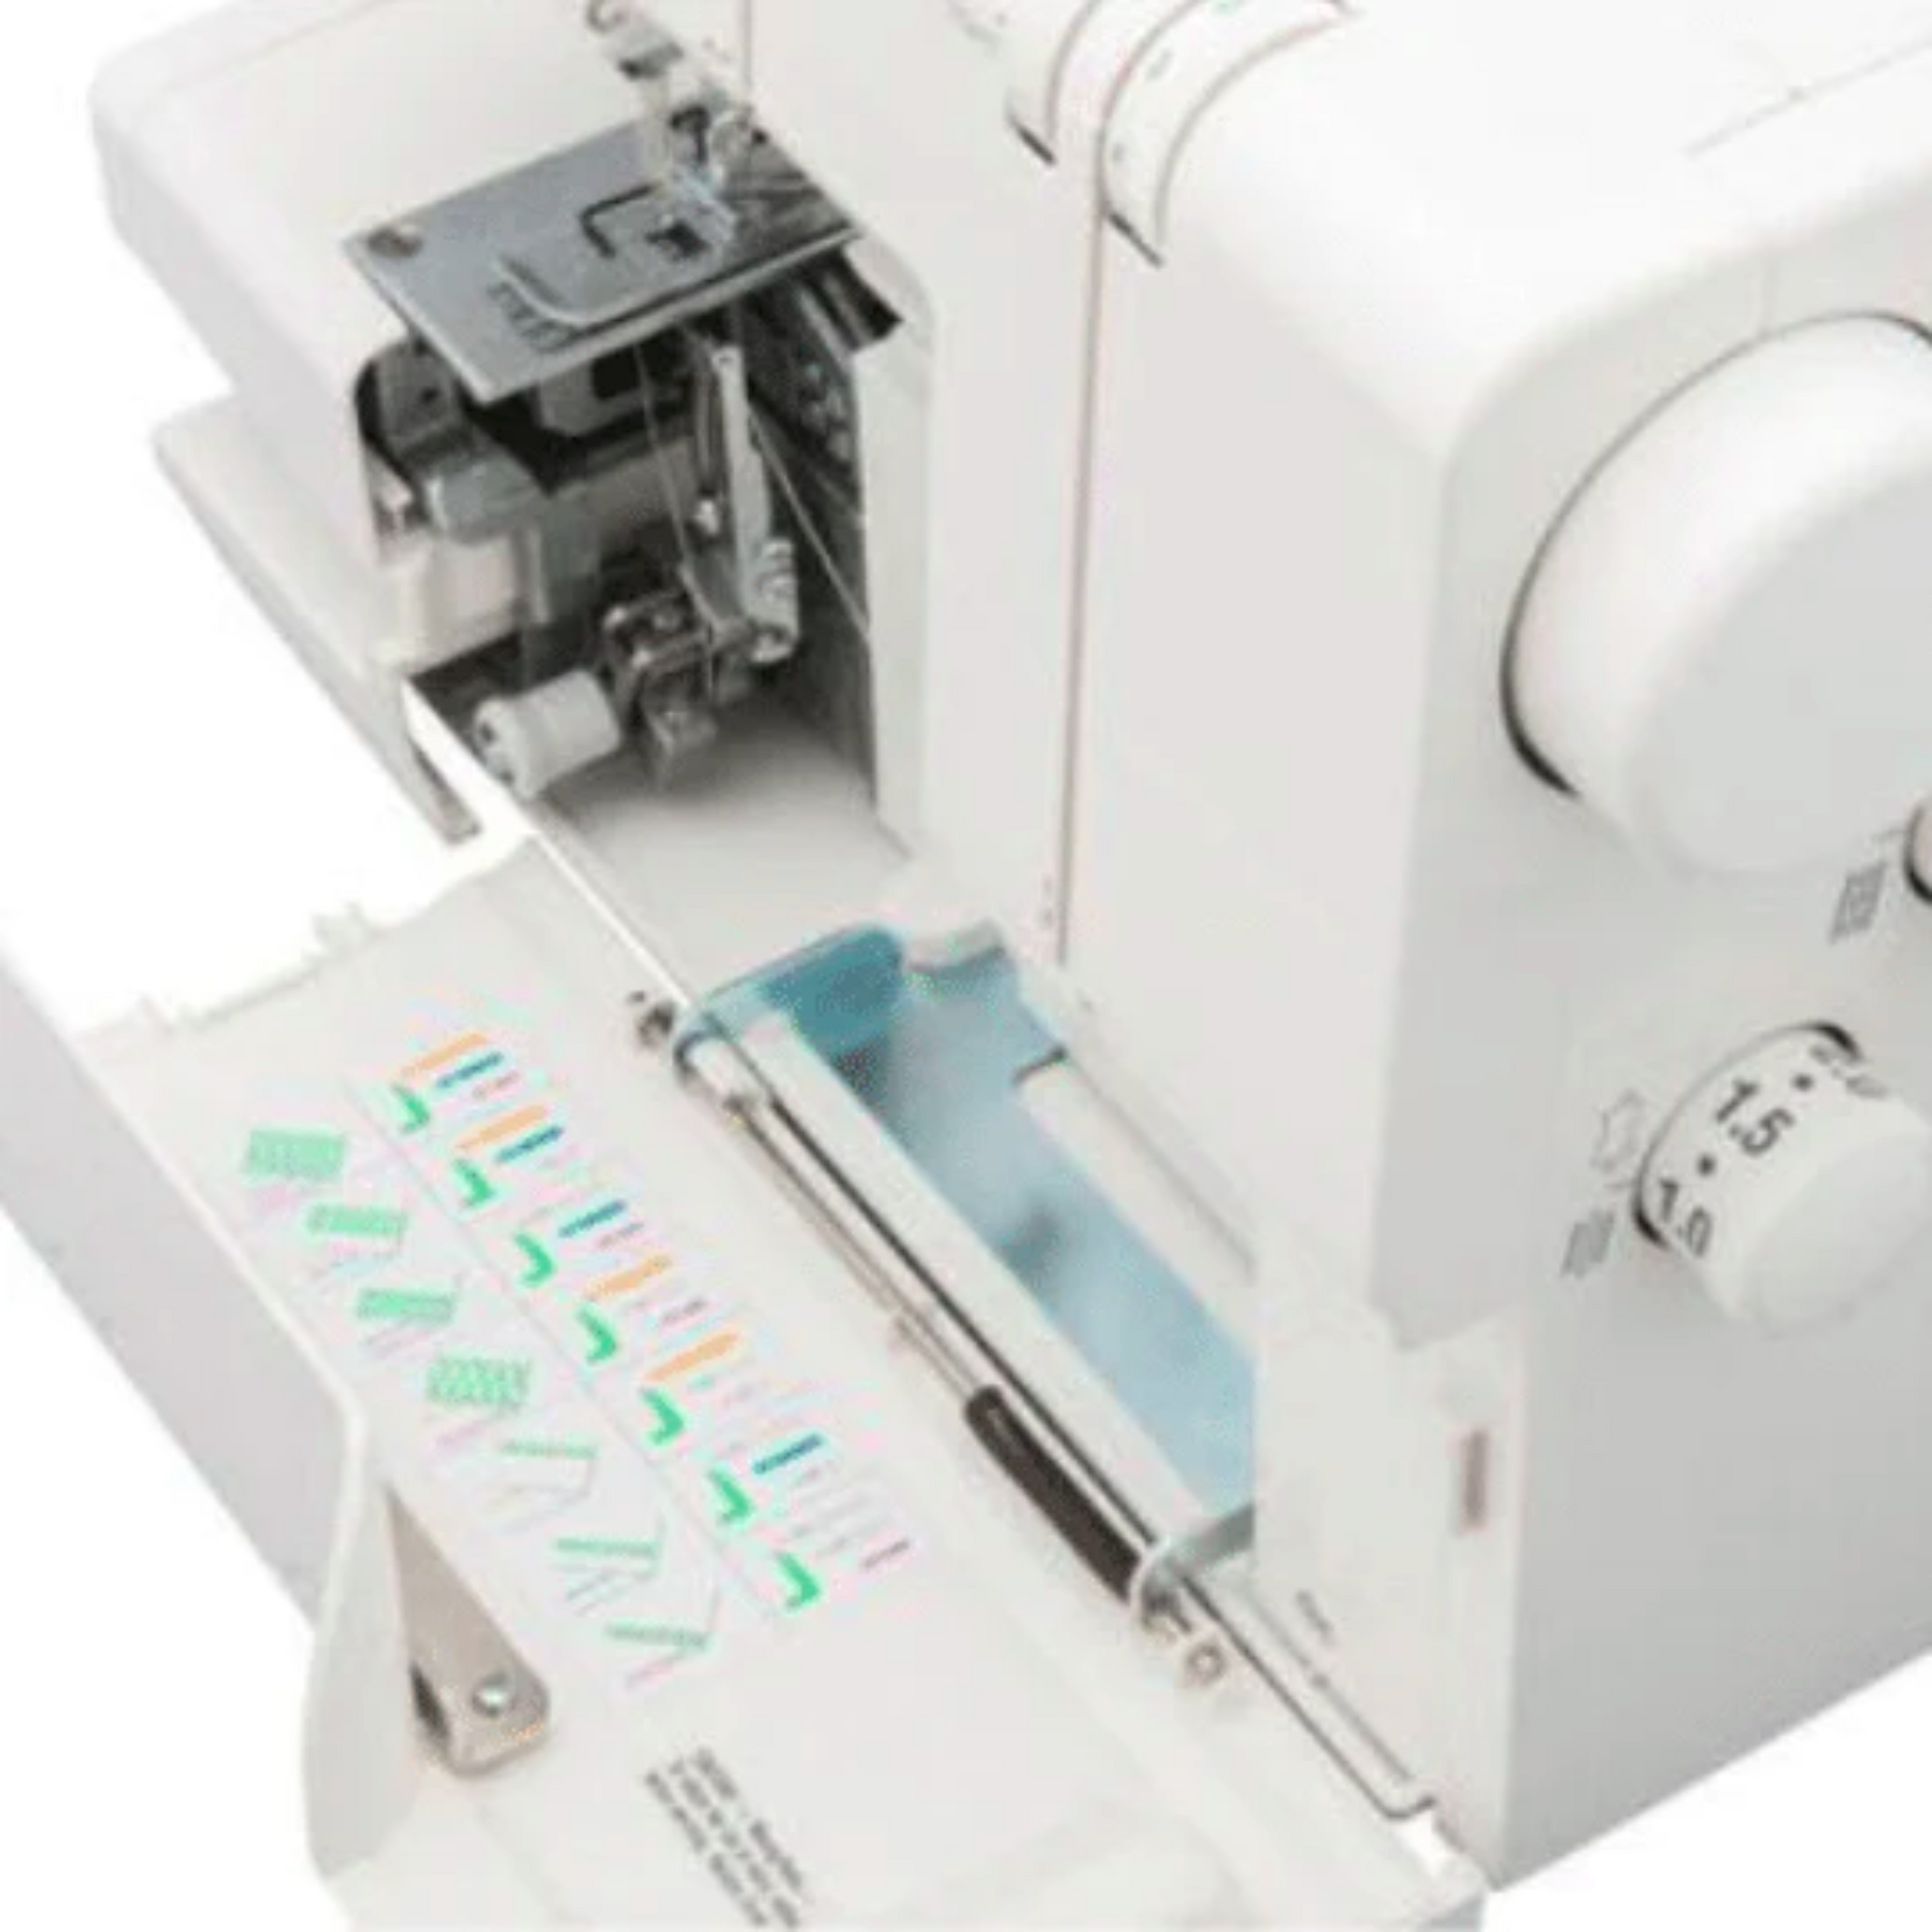 Janome coverpro 2000CPX coverstitch machine - White - Close view